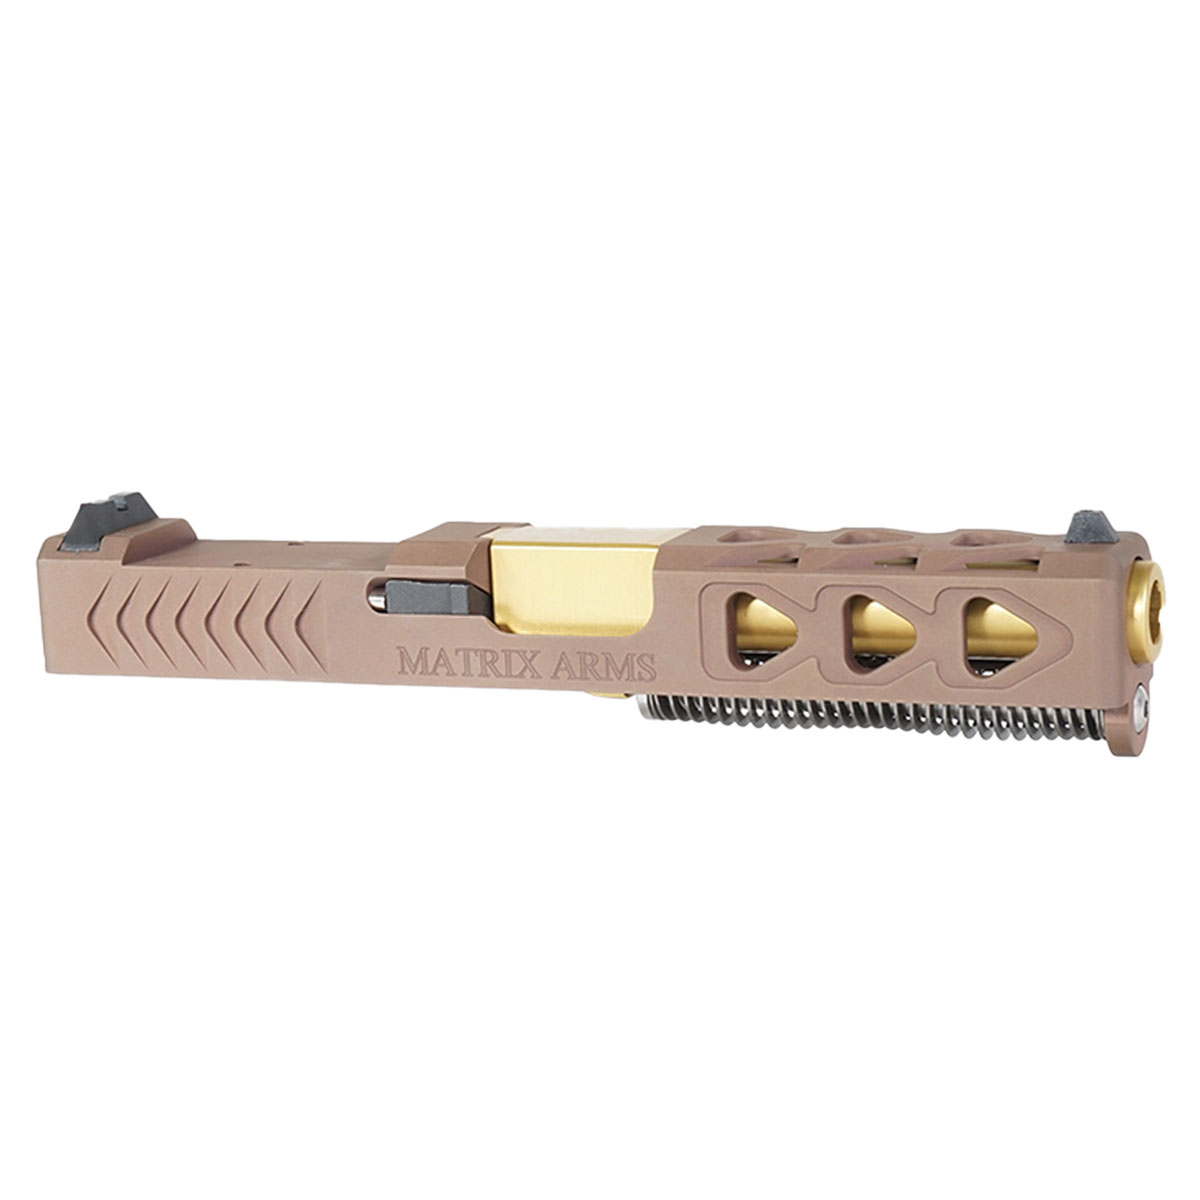 DTT 'Bellator Nidum' 9mm Complete Slide Kit - Glock 19 Gen 1-3 Compatible